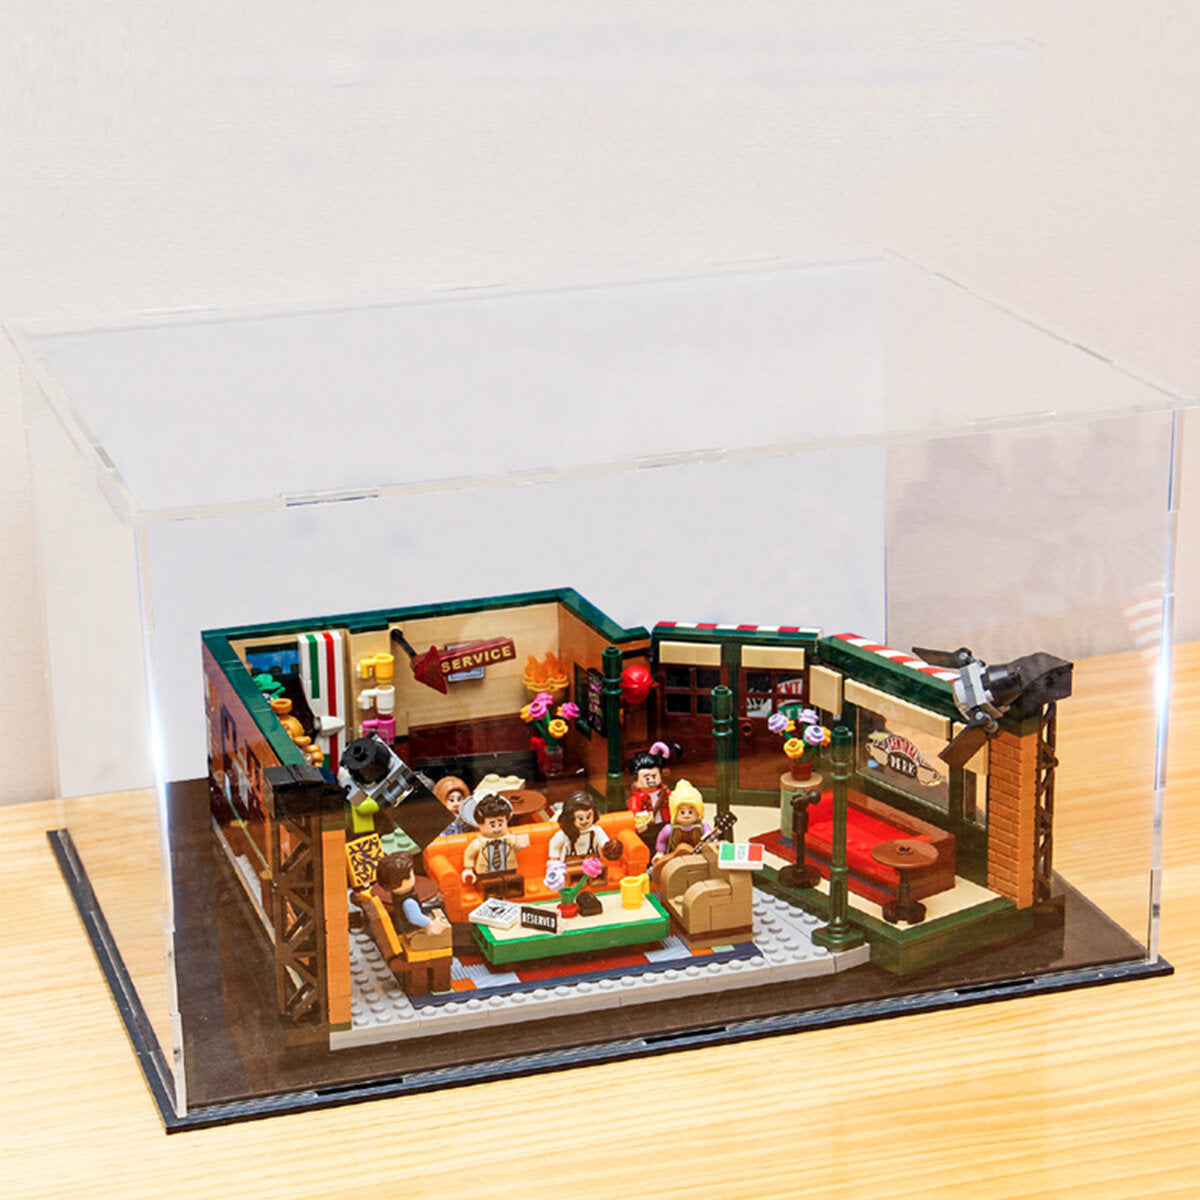 dhz acryl vitrinebox voor lego 21319 central perk friends bricks toy